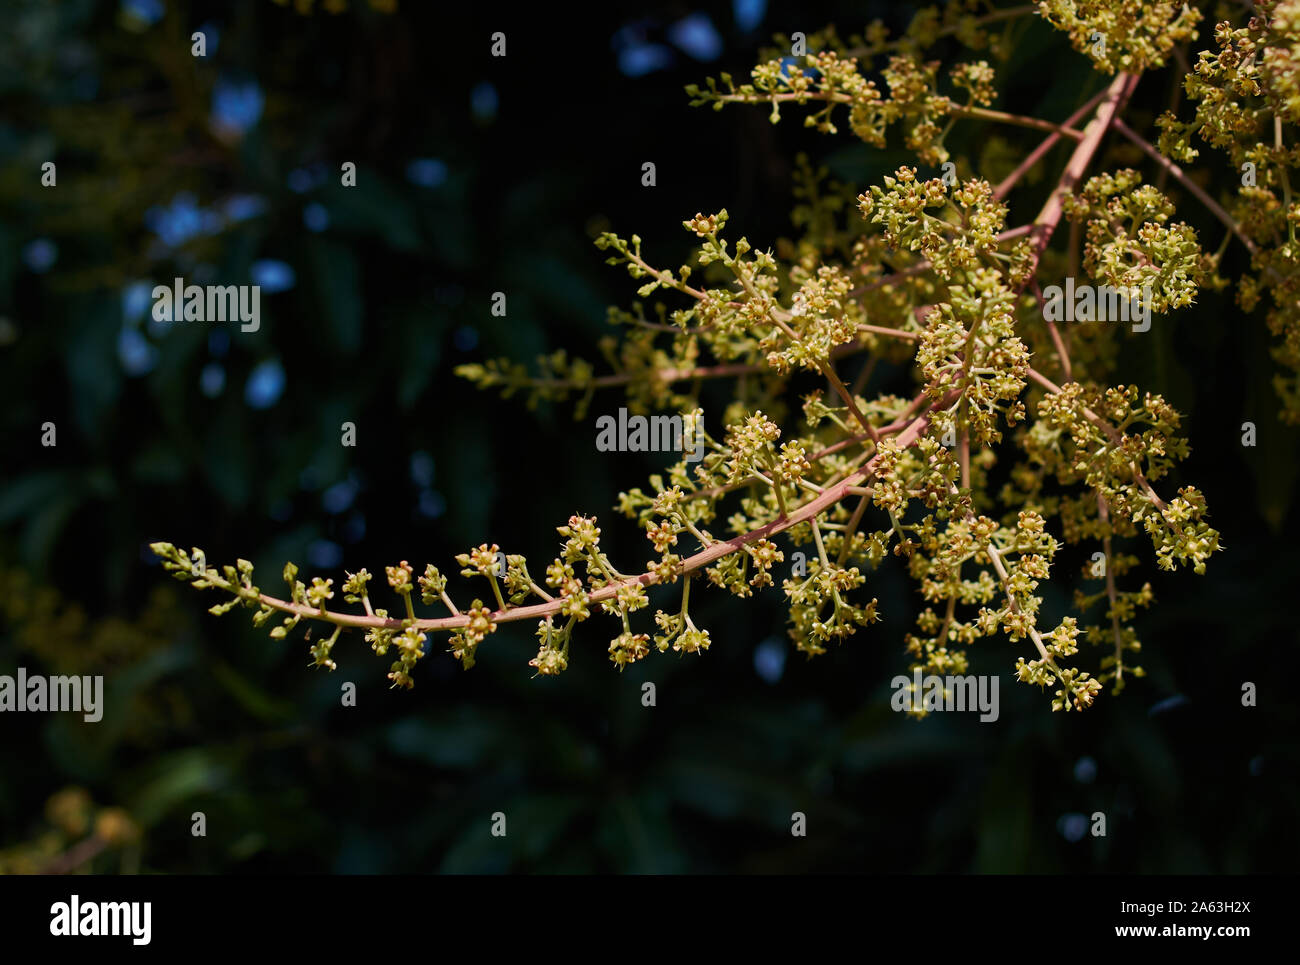 https://c8.alamy.com/comp/2A63H2X/flower-of-mango-tree-in-early-season-2A63H2X.jpg